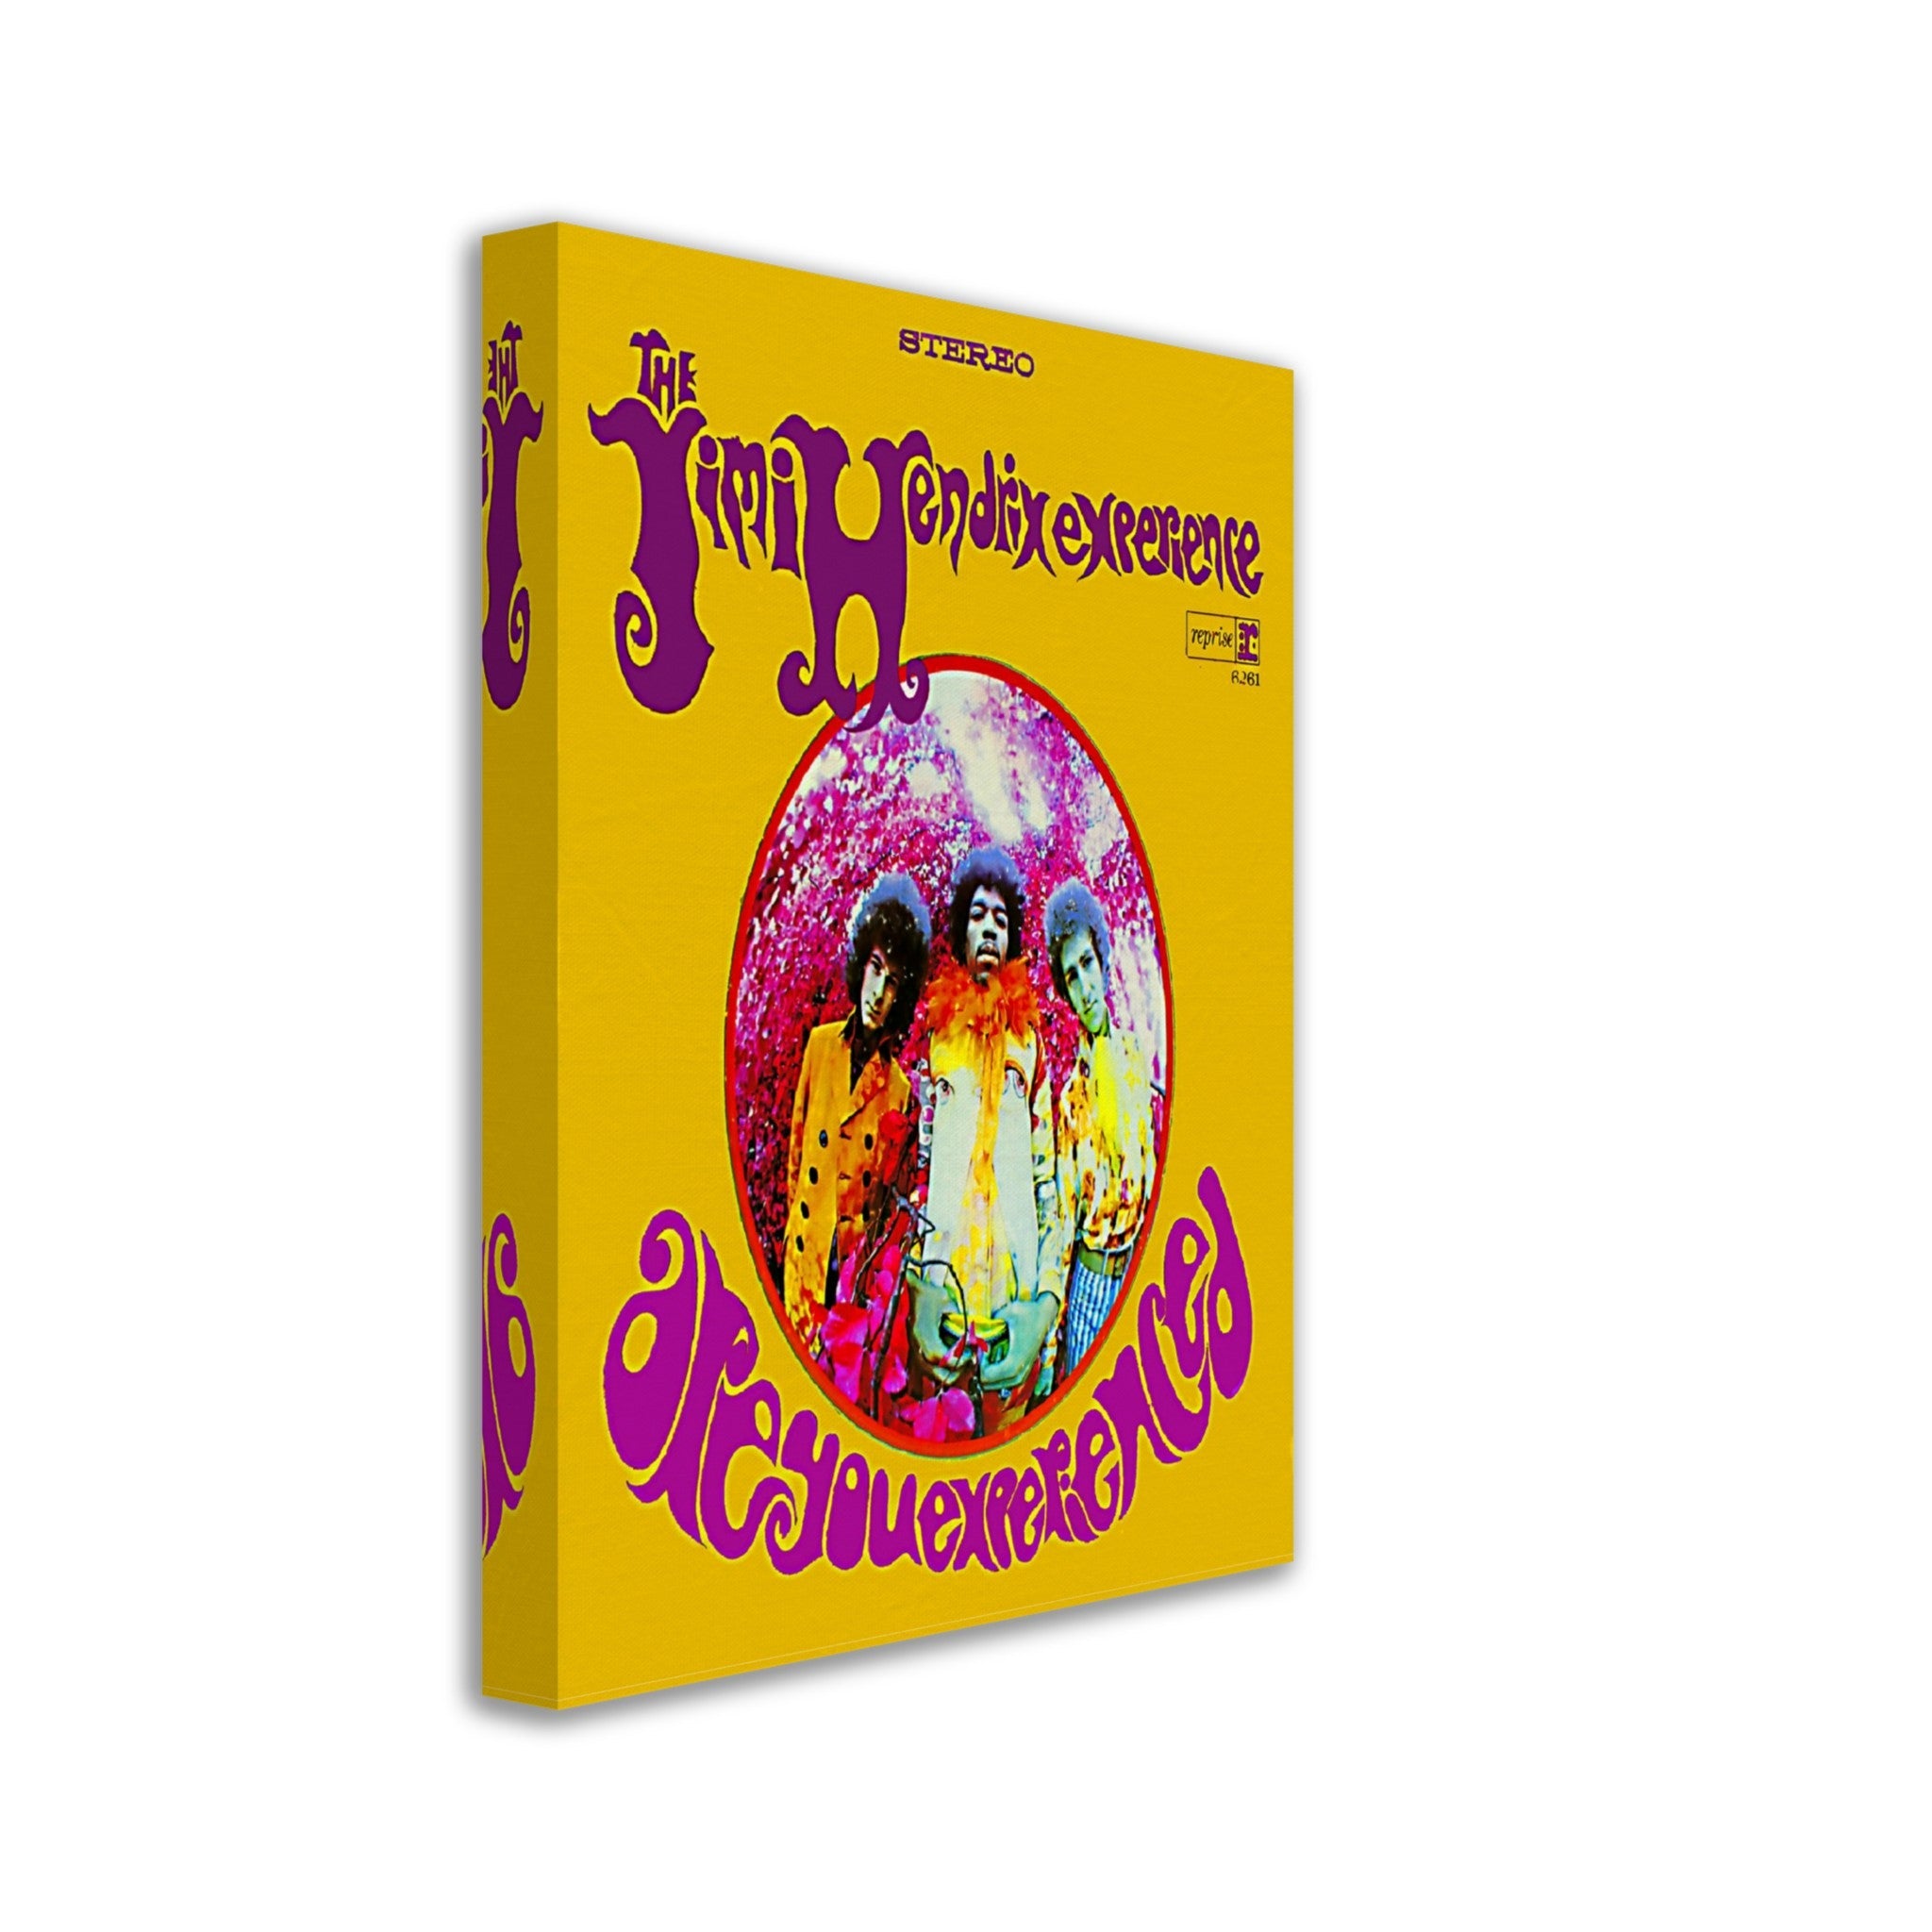 Jimi Hendrix Canvas, Jimi Hendrix Experience Album Cover - Jimi Hendrix Canvas Print - Psychedelic Rock - WallArtPrints4U